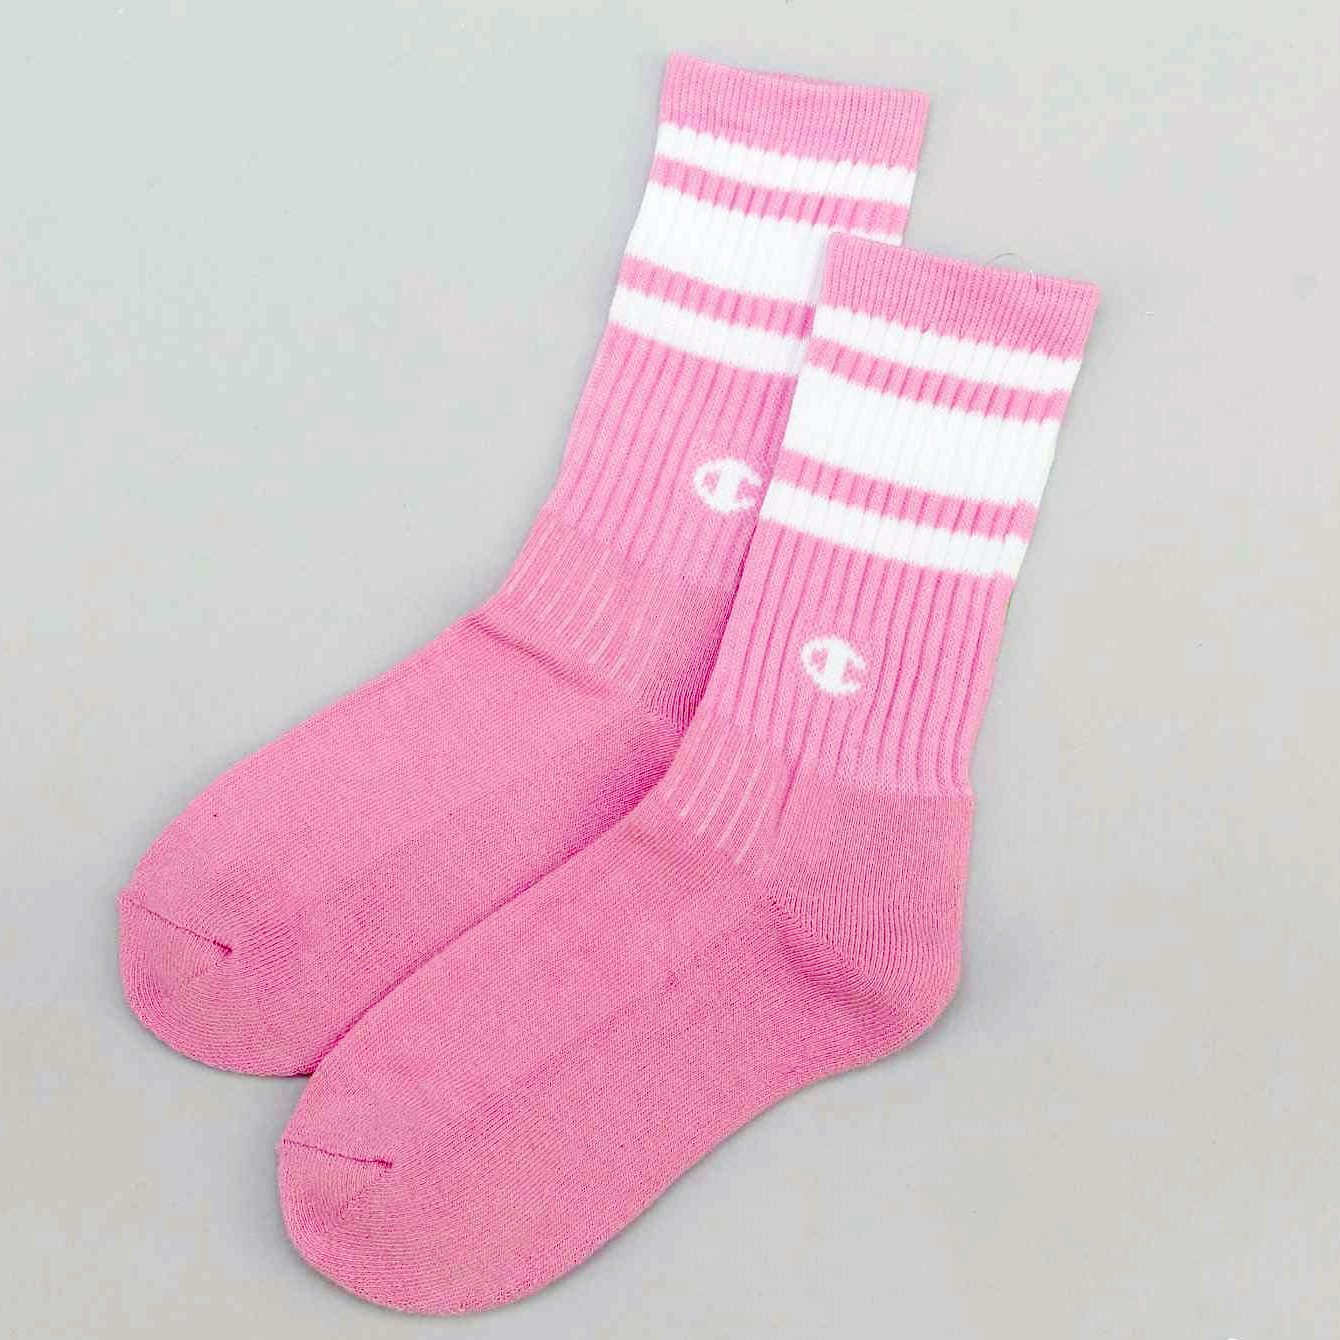 champion socks pink